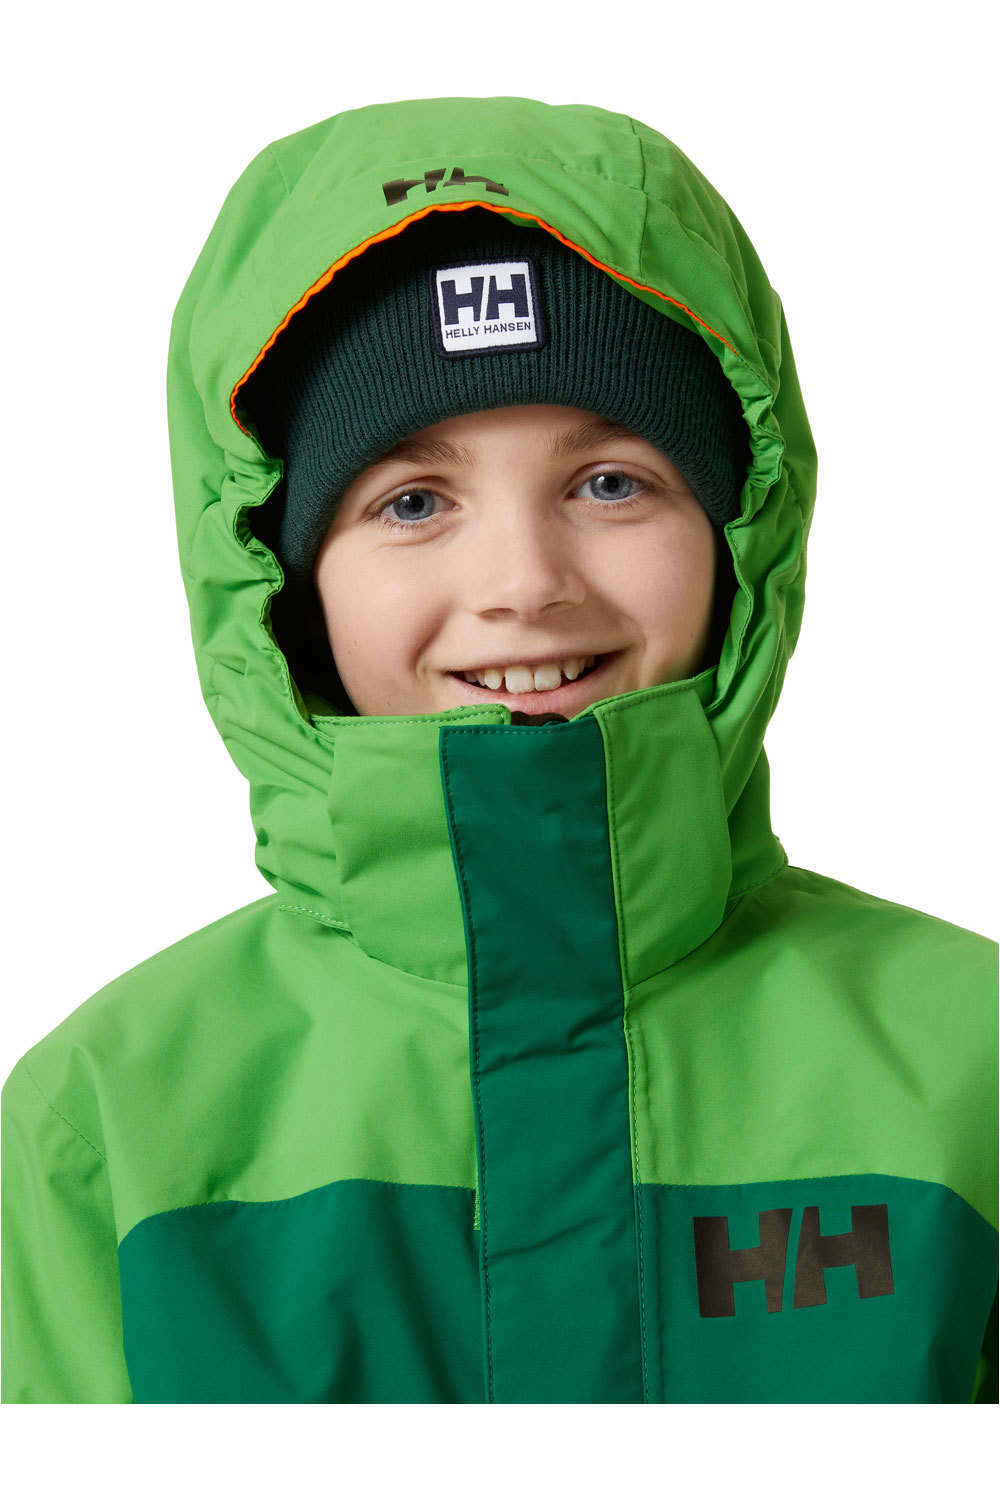 Helly Hansen chaqueta esquí infantil JR LEVEL JACKET vista detalle